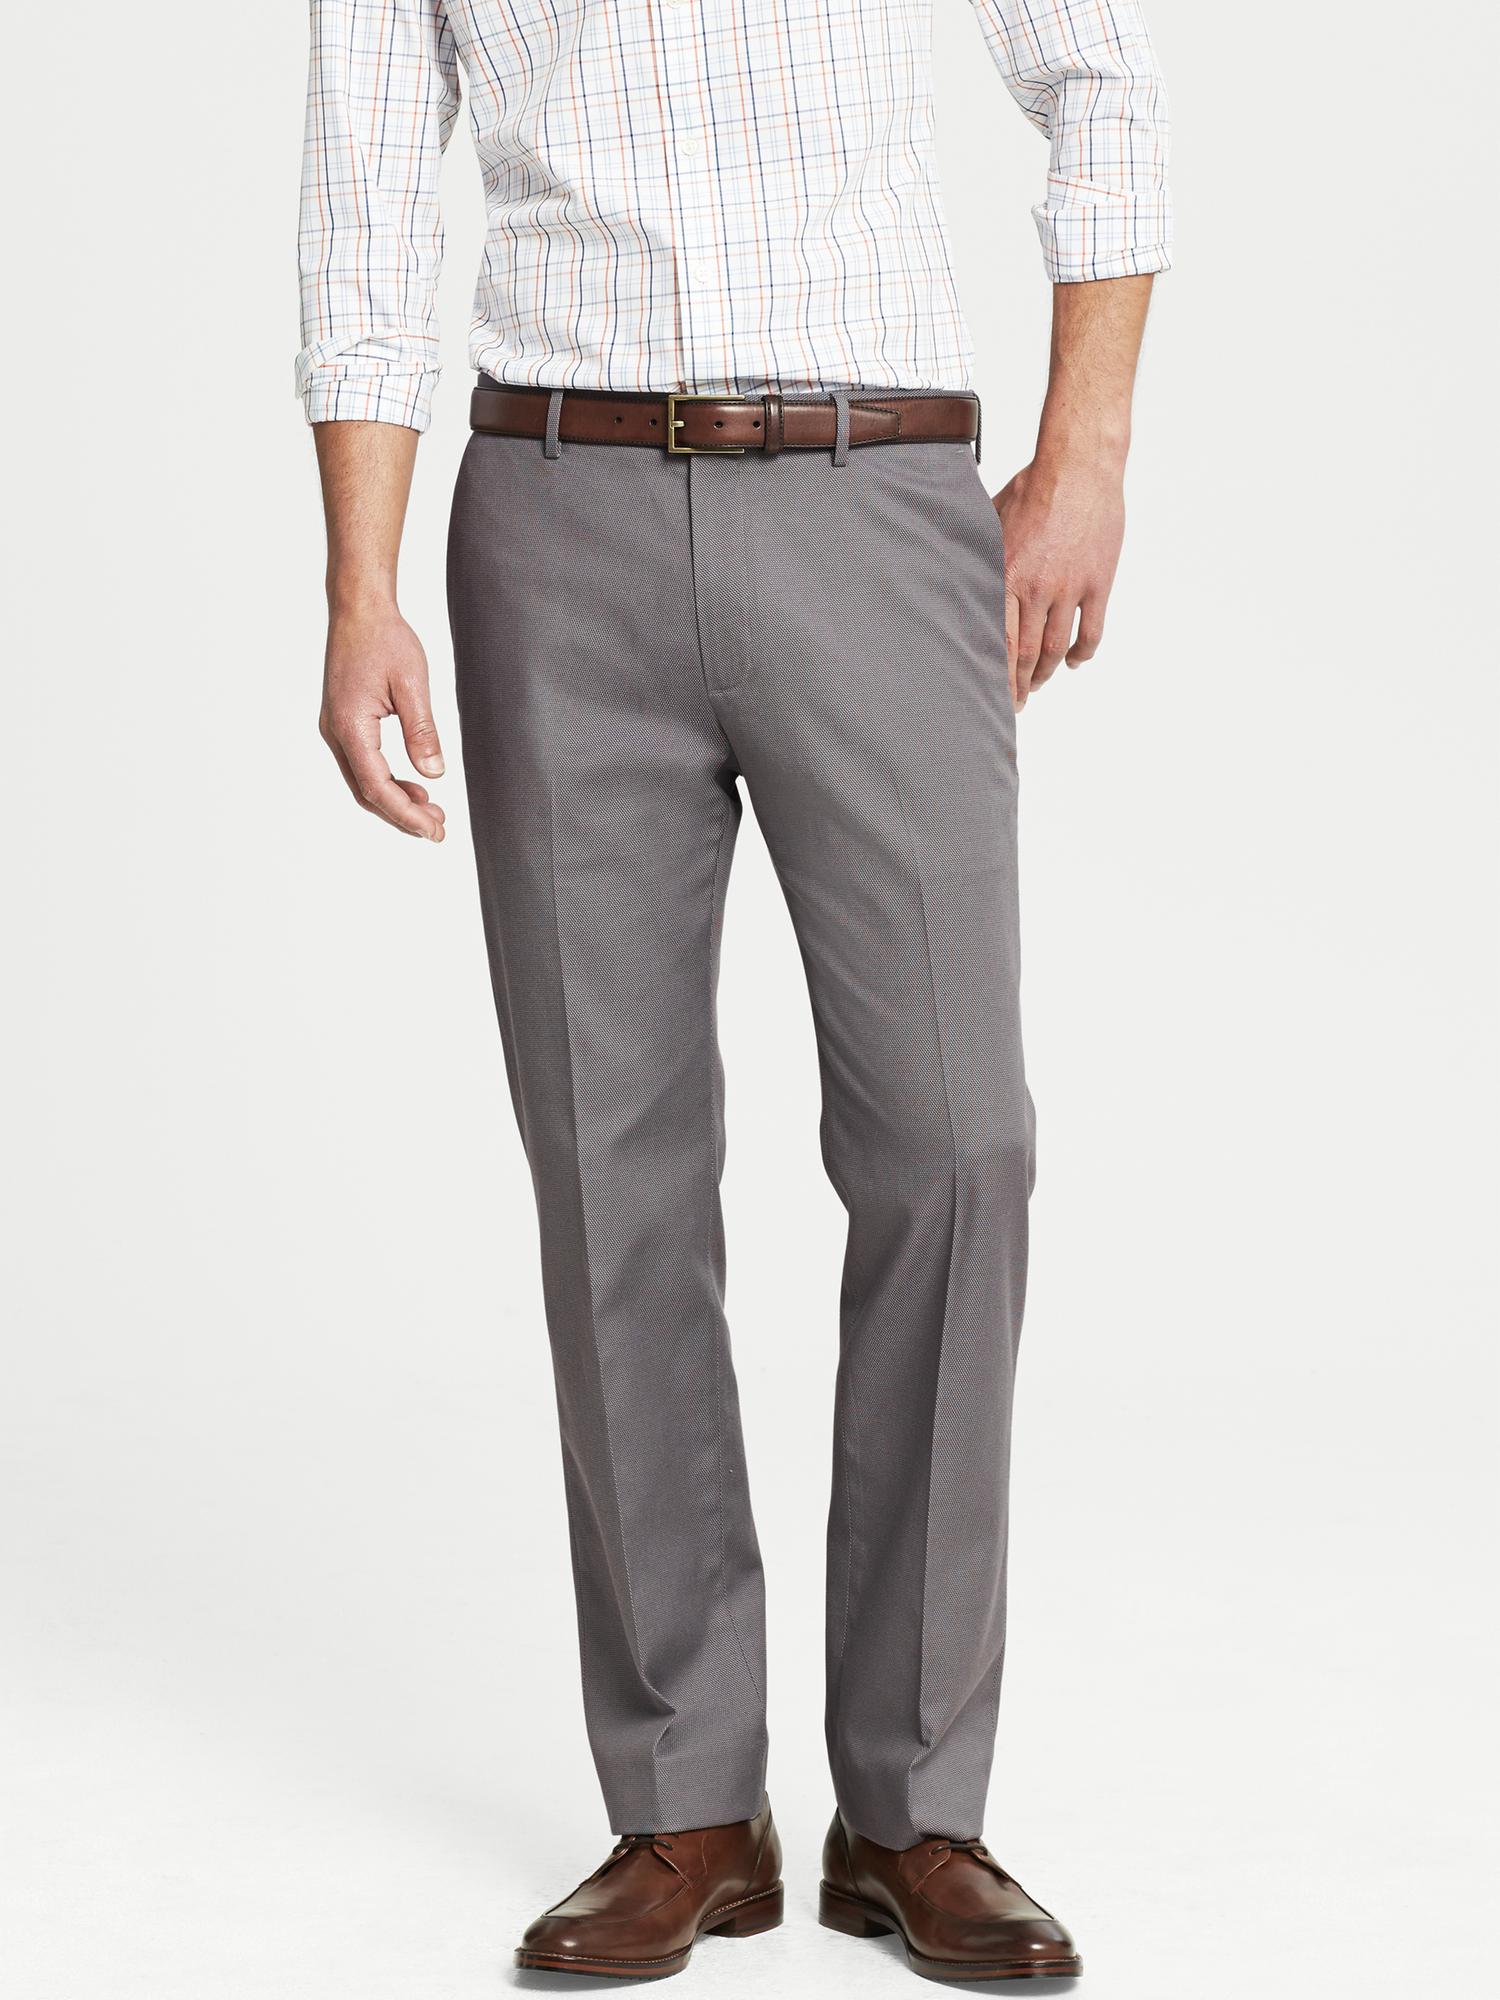 Tailored Slim-Fit Non-Iron Cotton Pant